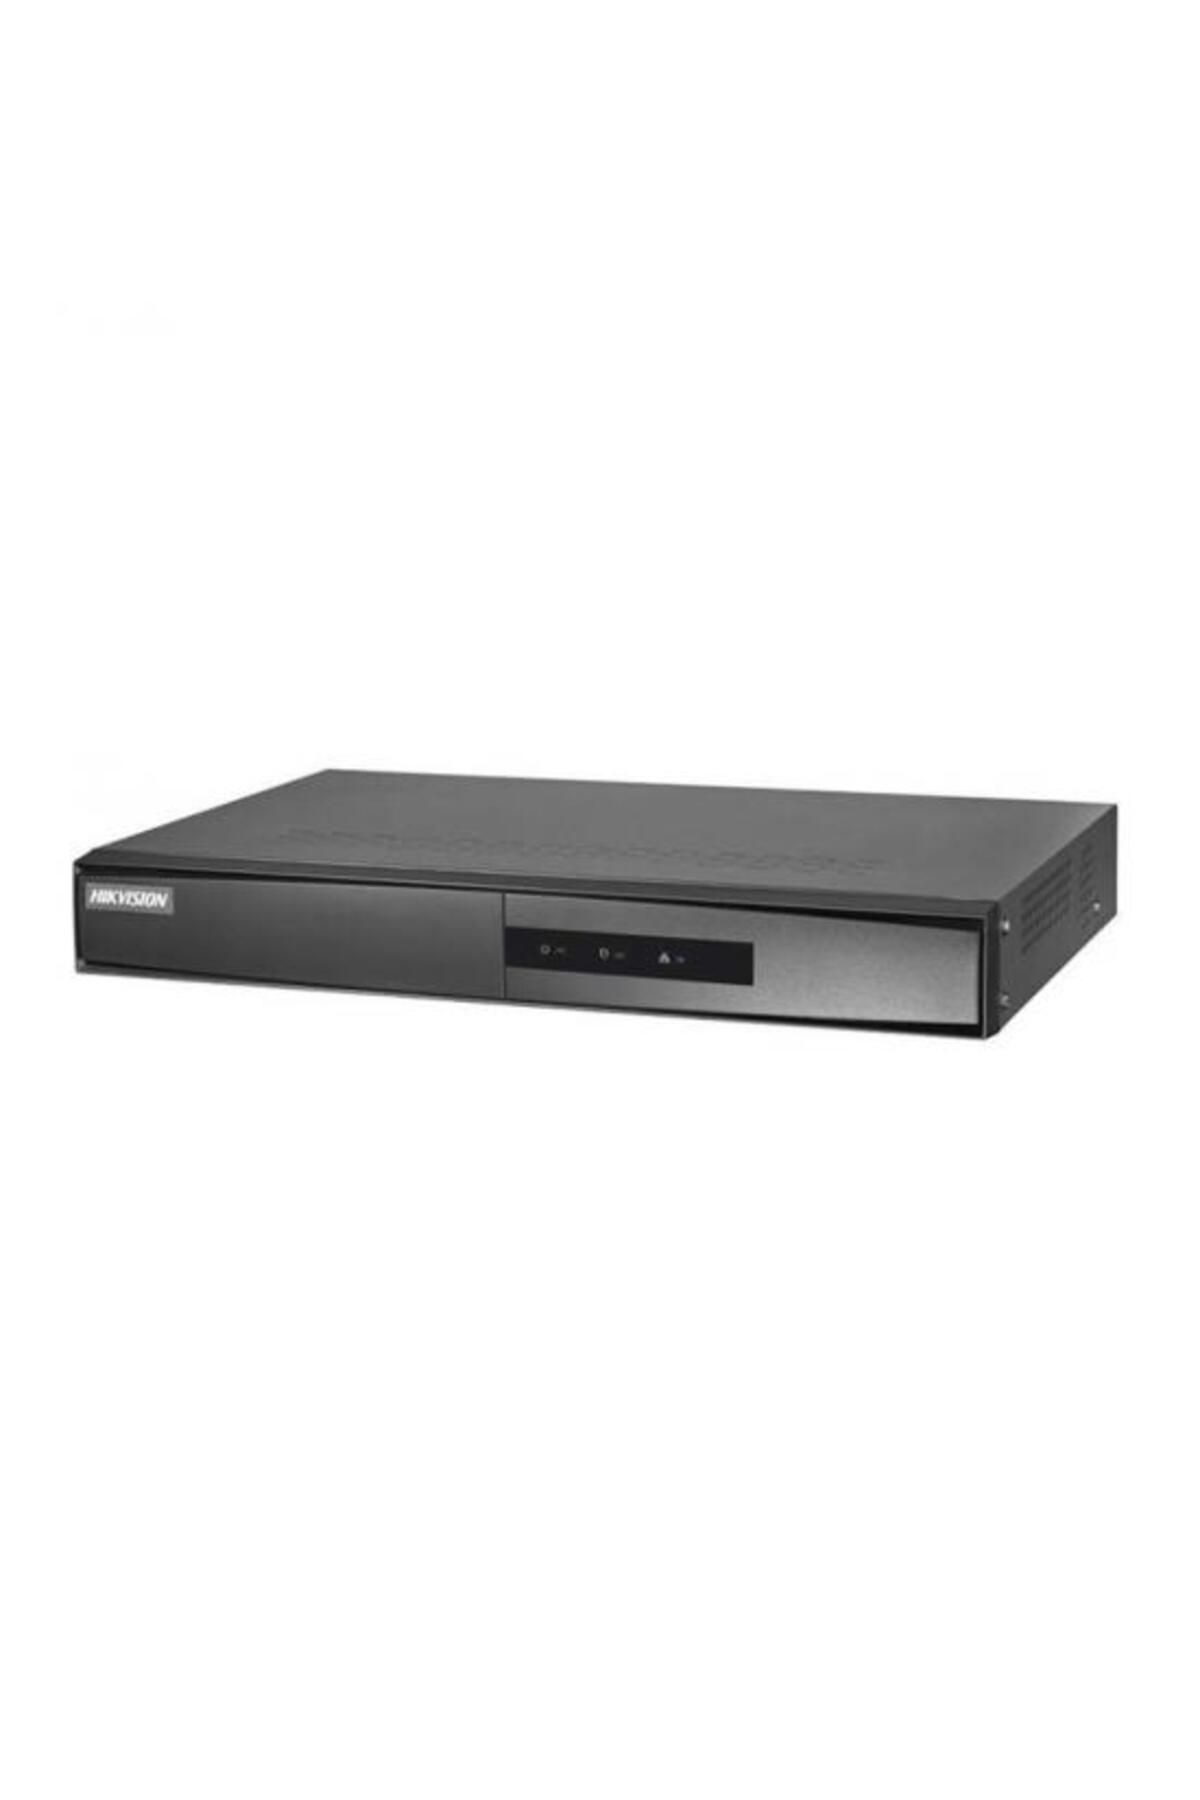 Hilook NVR-116MH-C 16 Kanal x 1Port 1x4MP 1 HDD IP Kayıt Cihazı